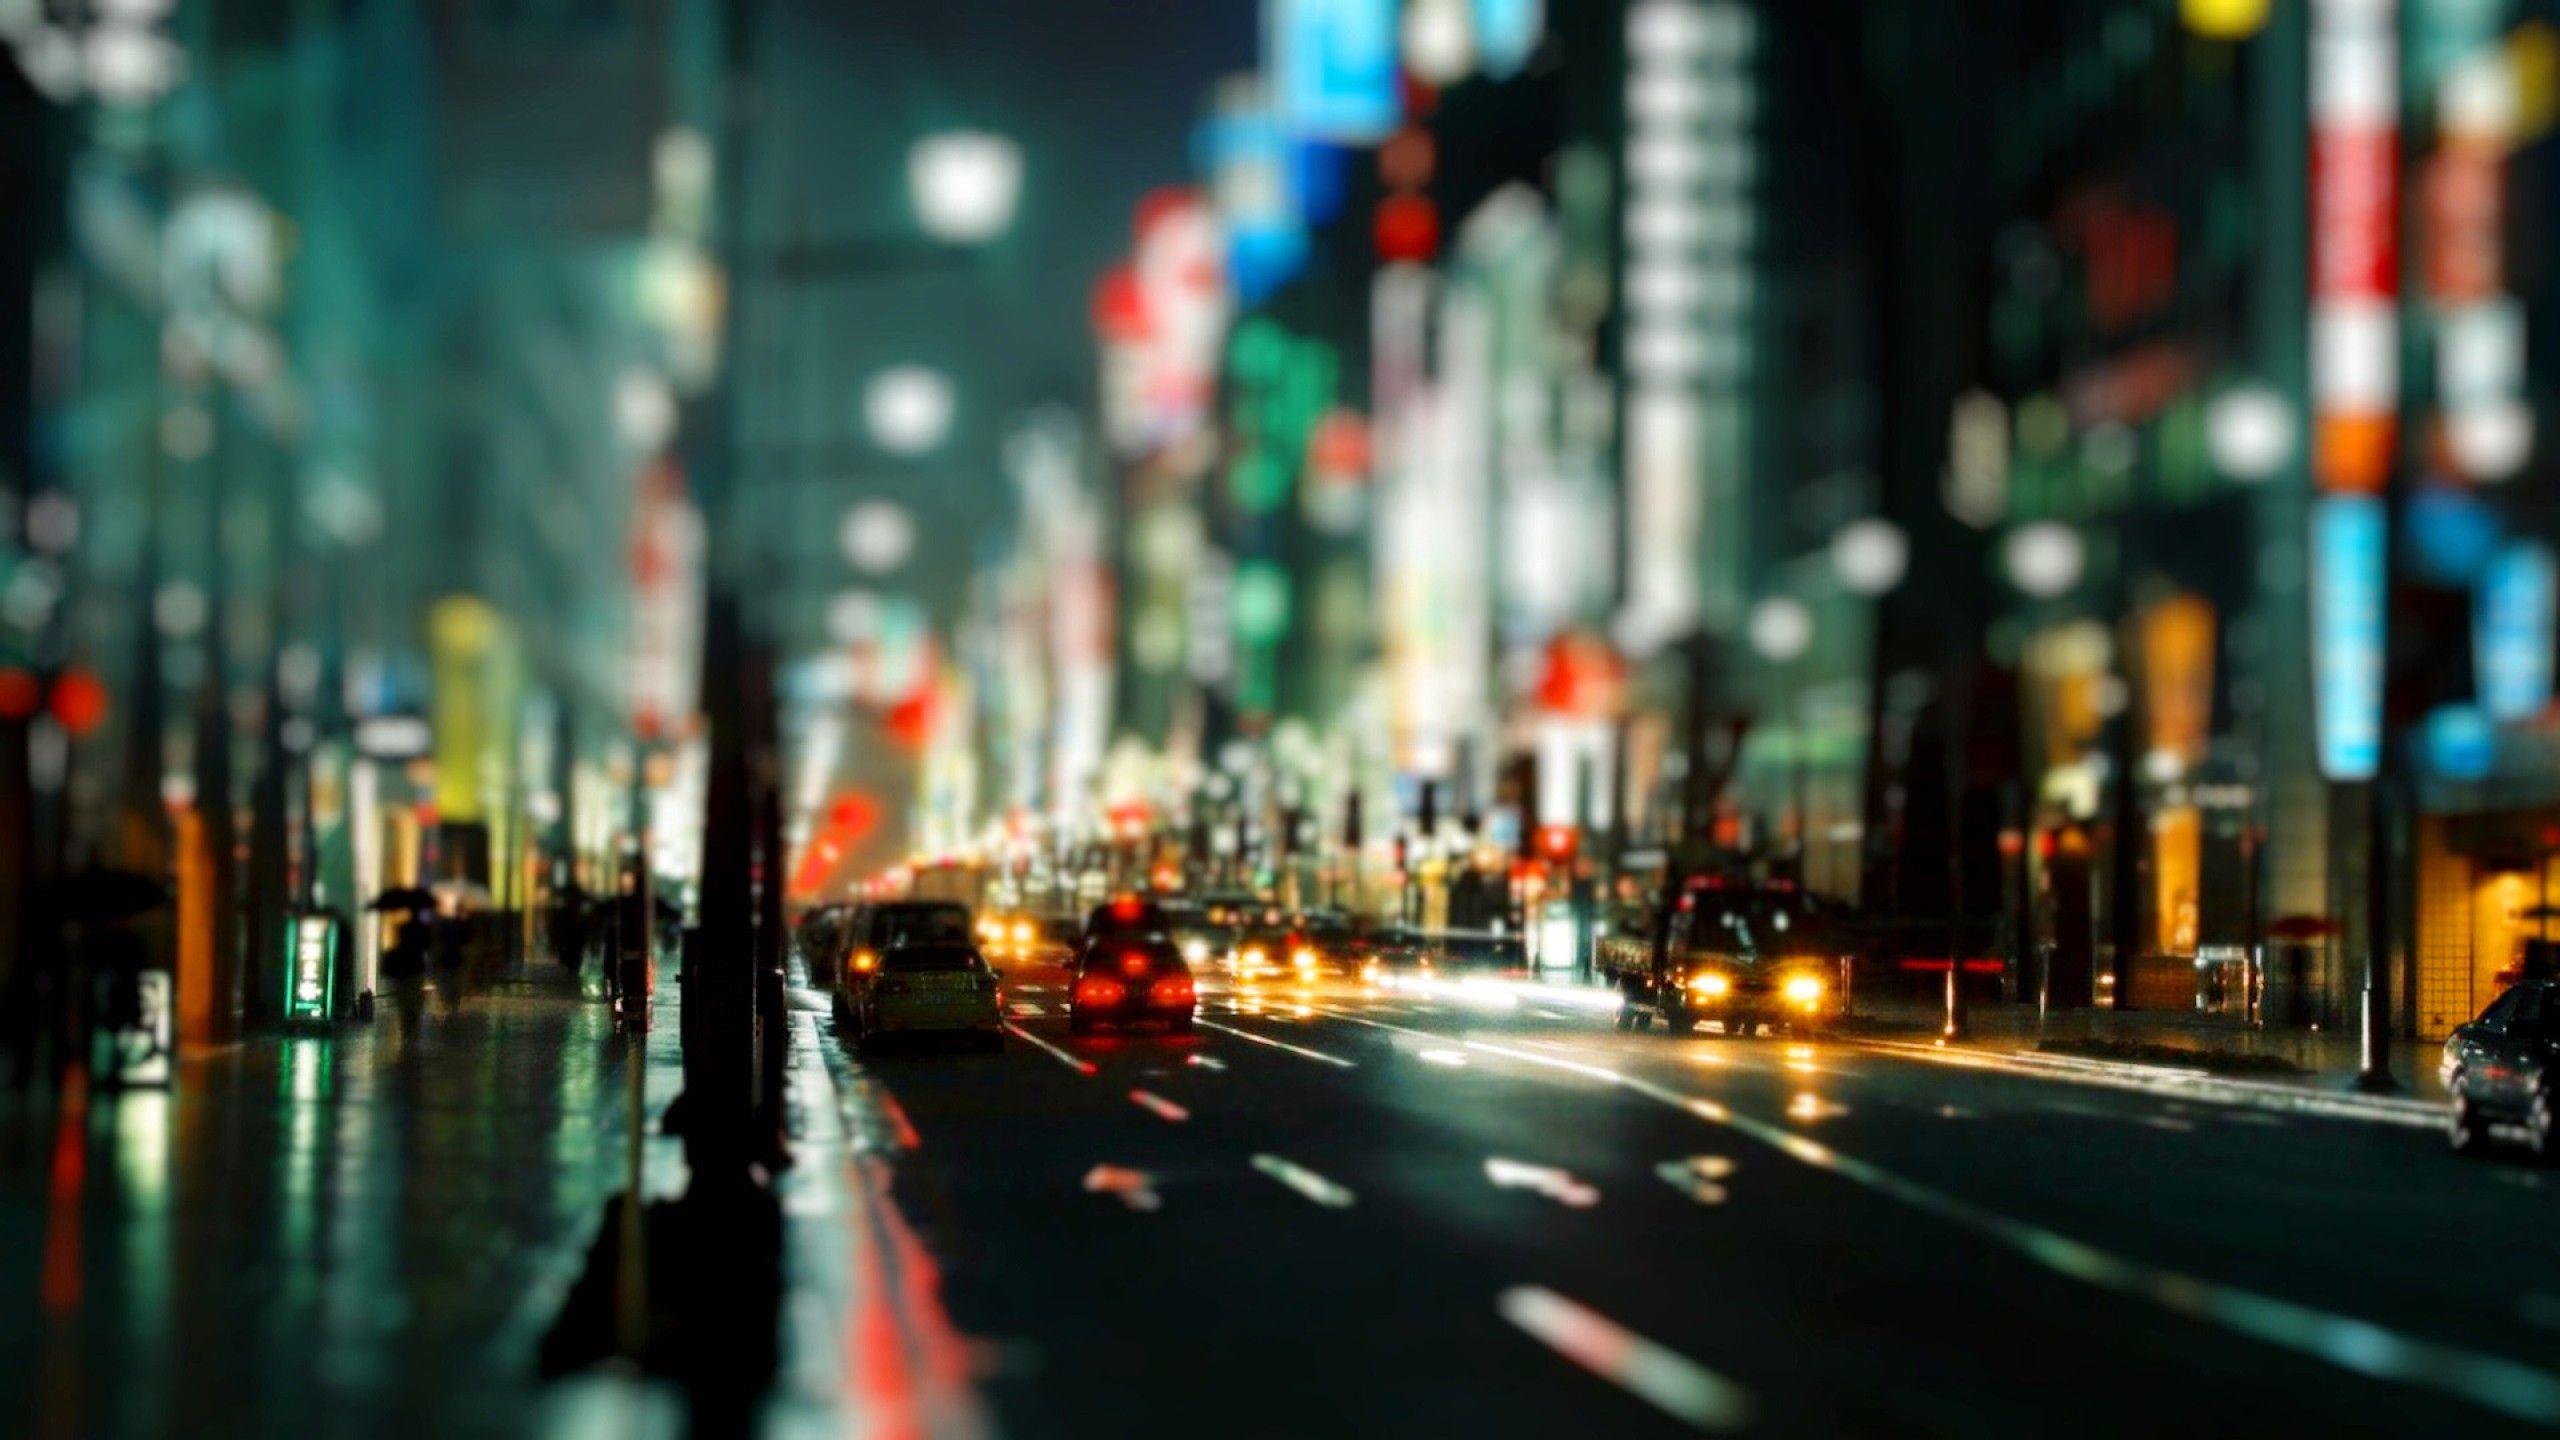 City Street Night Background Wallpaper. I HD Image